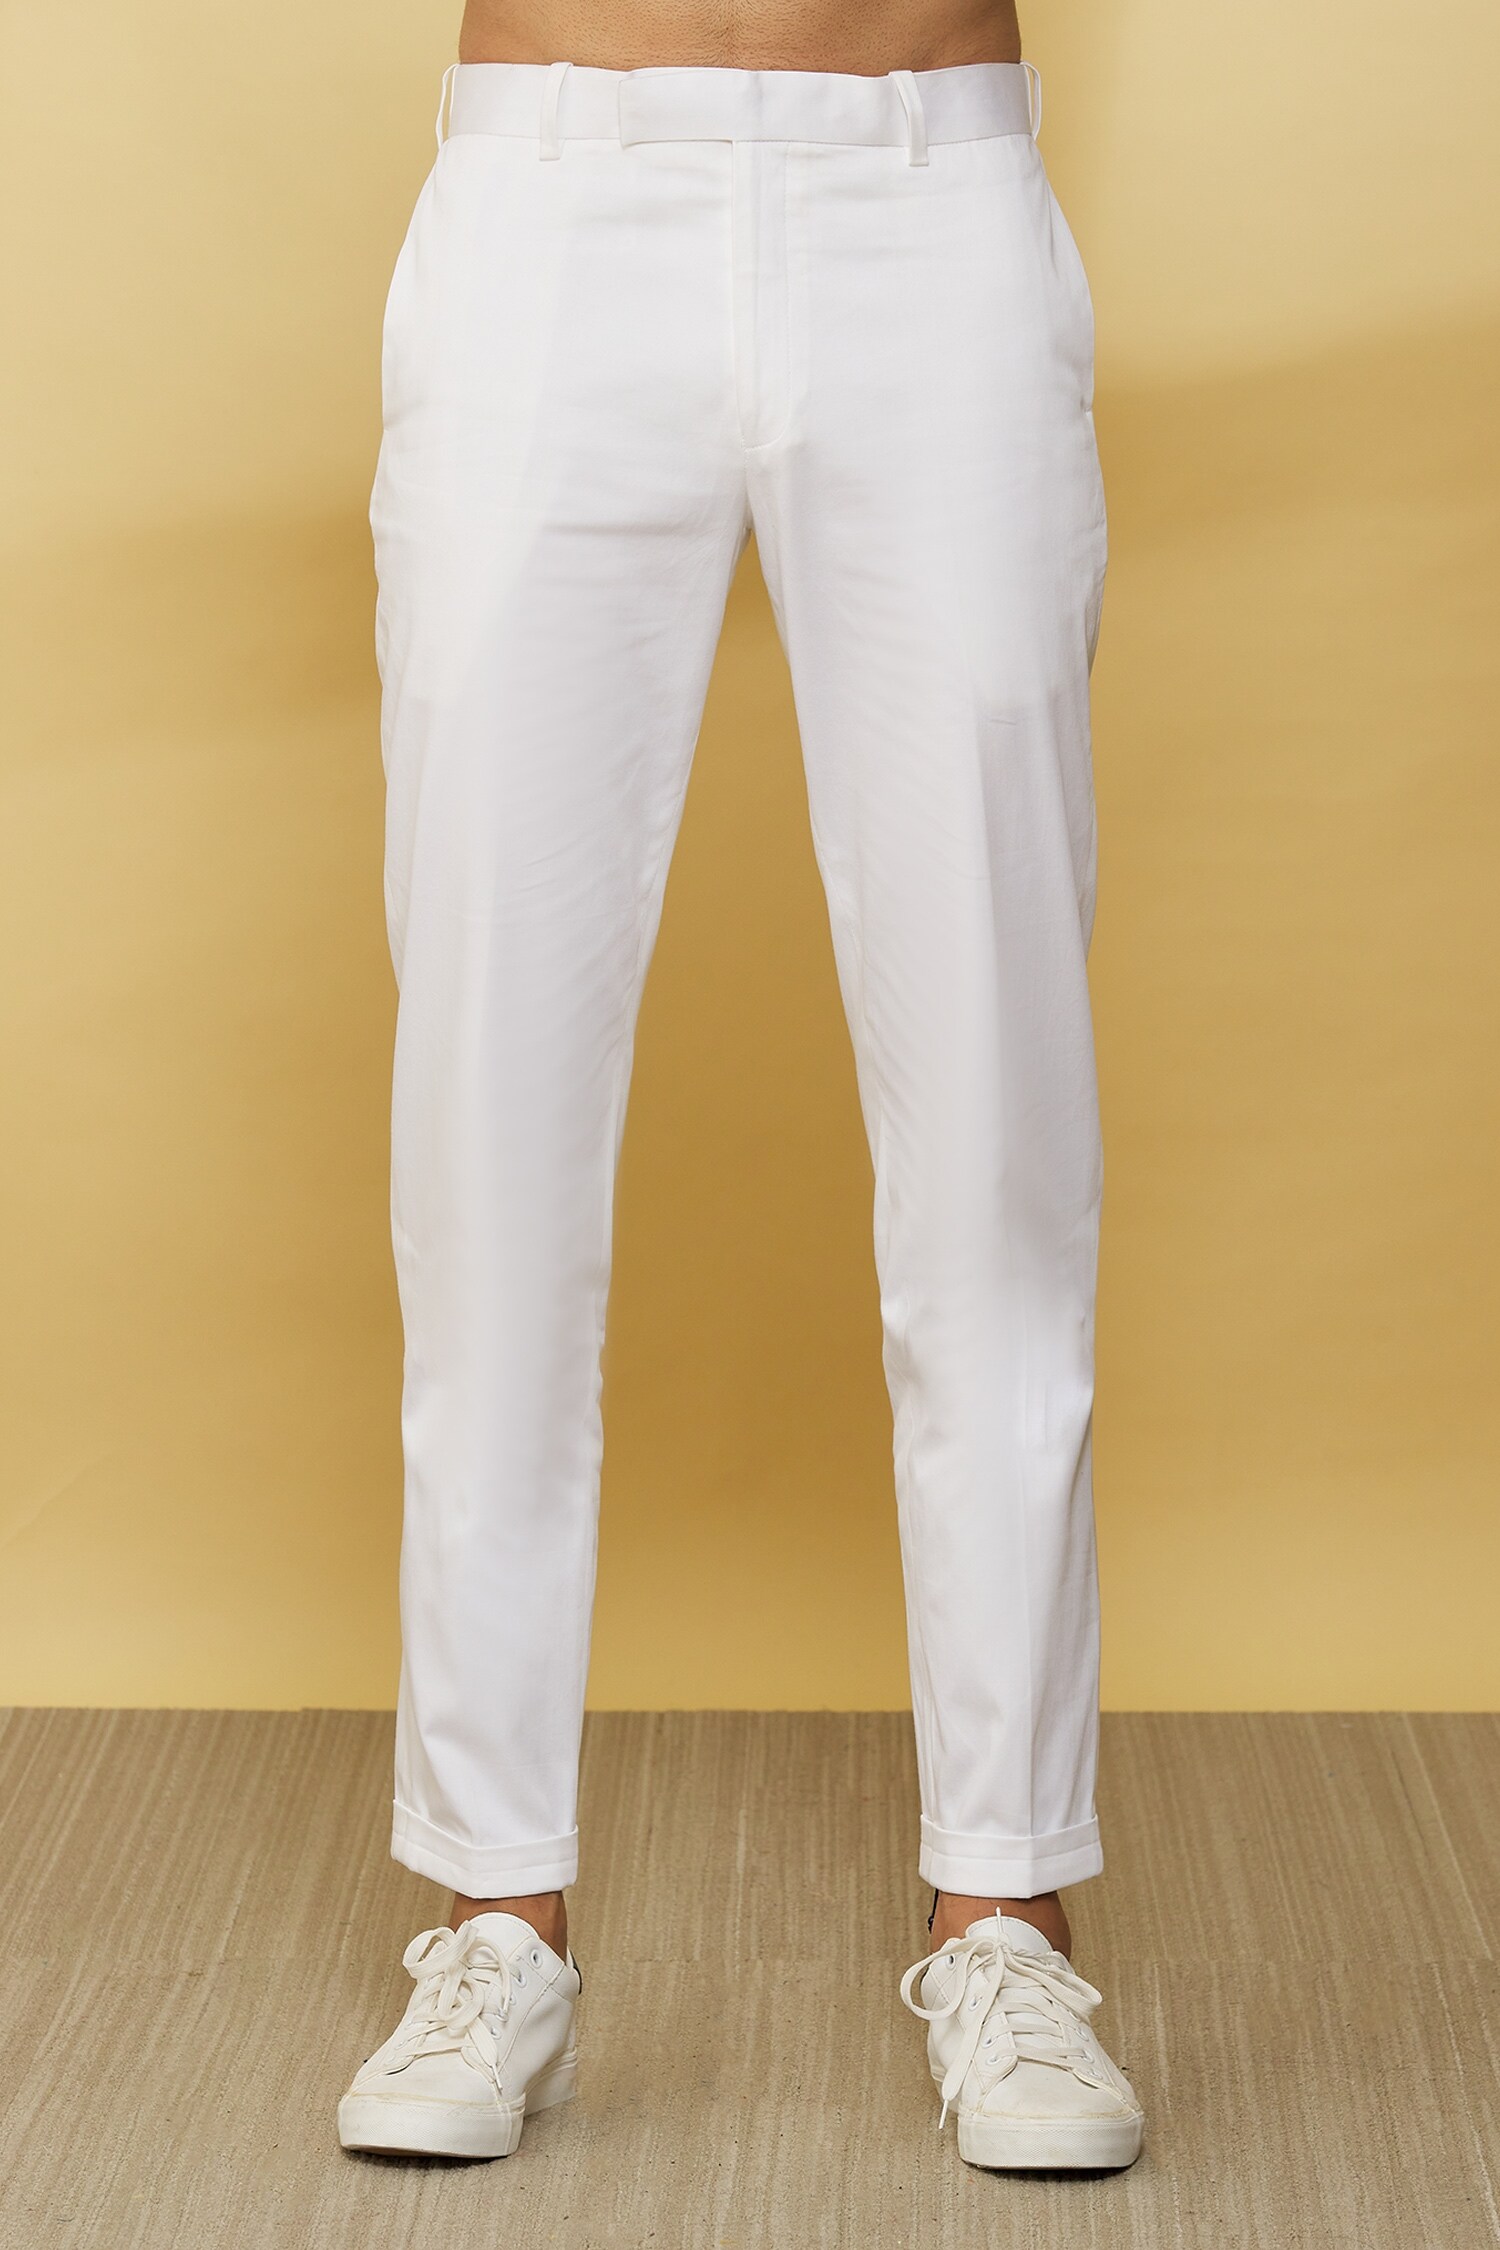 Viggo | Malmo Skinny Fit Men's White Suit Trousers | Suit Direct-hangkhonggiare.com.vn